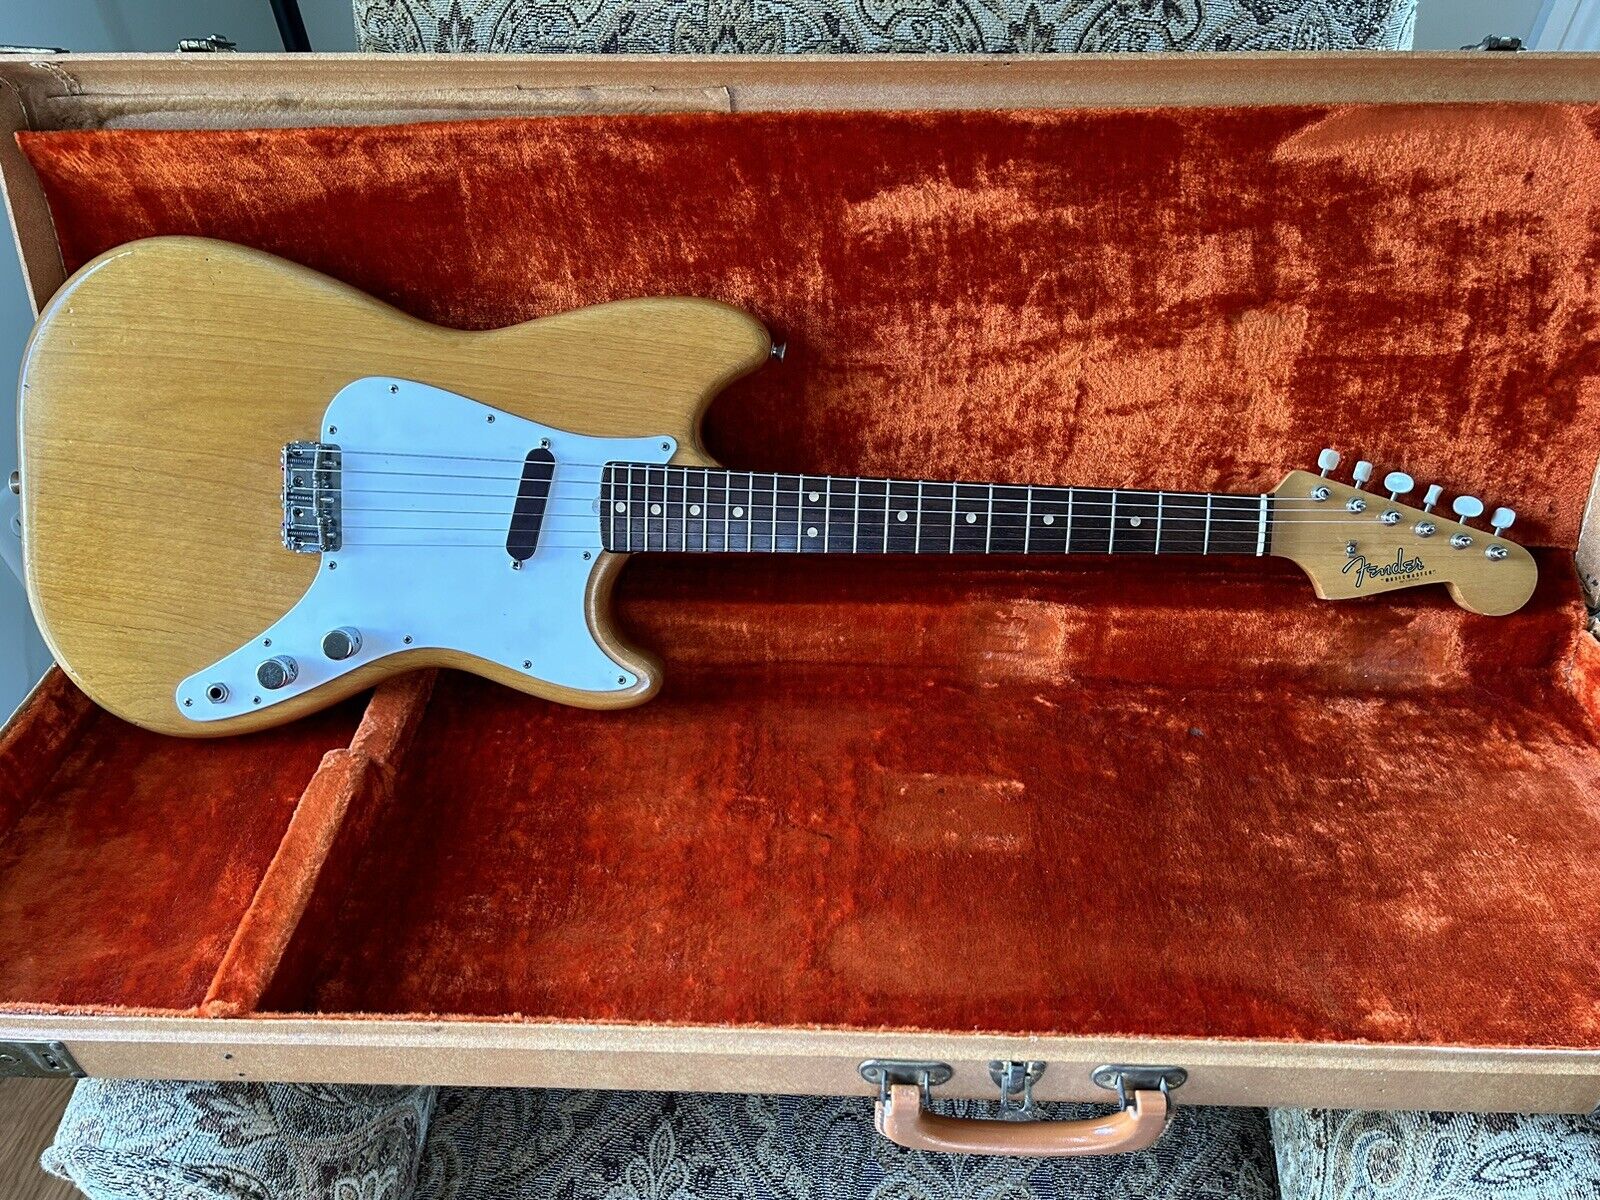 1962 Fender Musicmaster Pre-CBS Vintage Guitar with Original Case